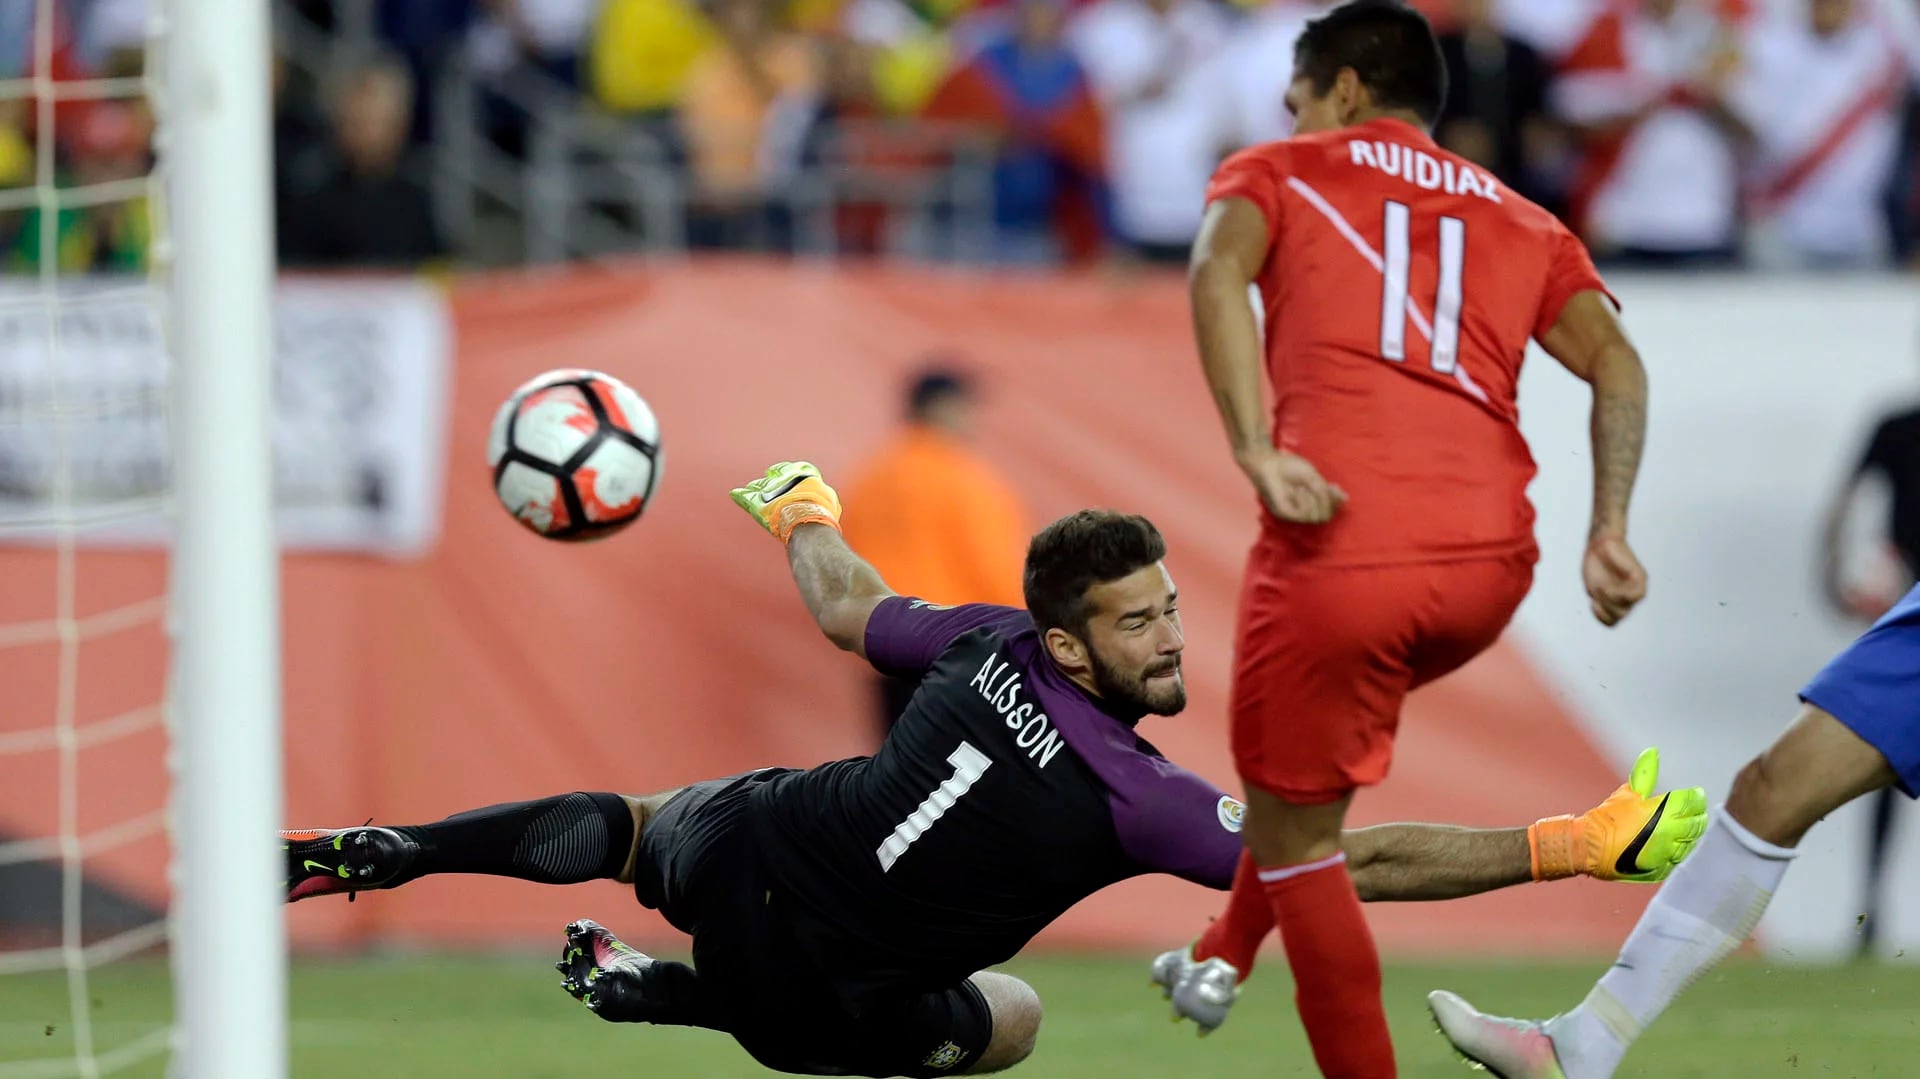 Ruidiaz anota el gol que le eliminó a Brasil de la Copa América Centenario (AP)